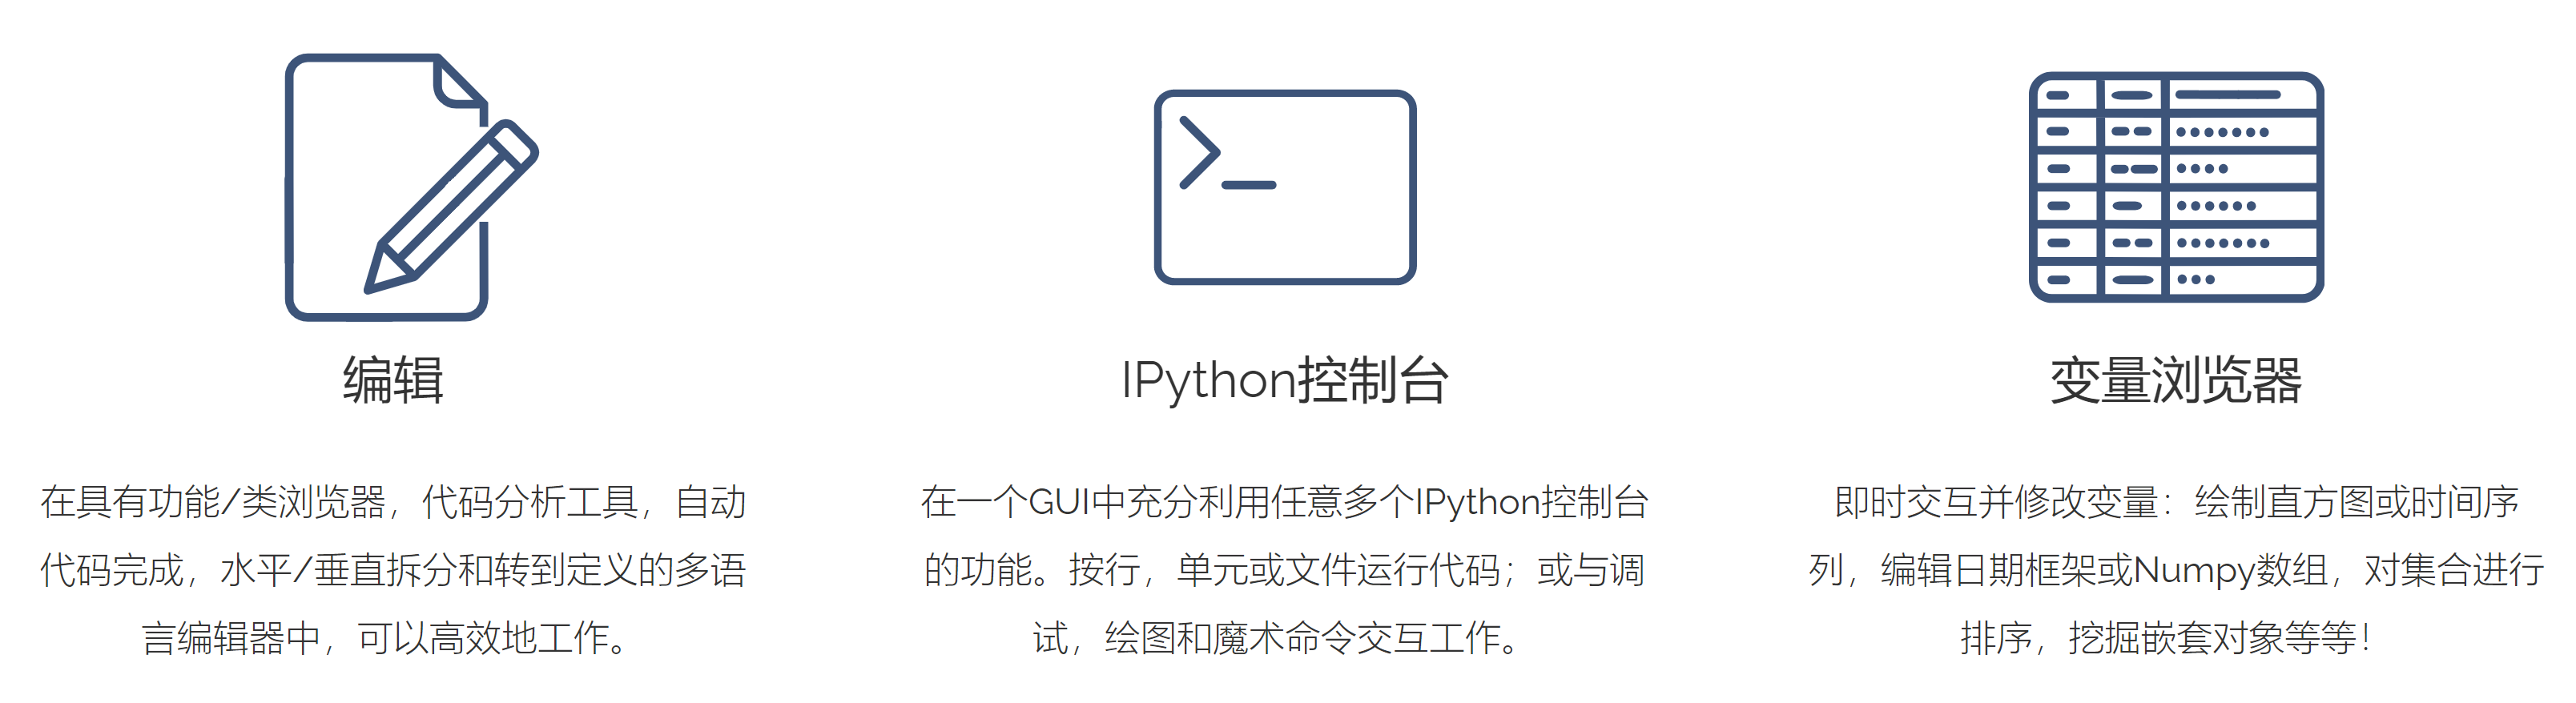 Spyder –用Python编写的免费开源科学领域IDE